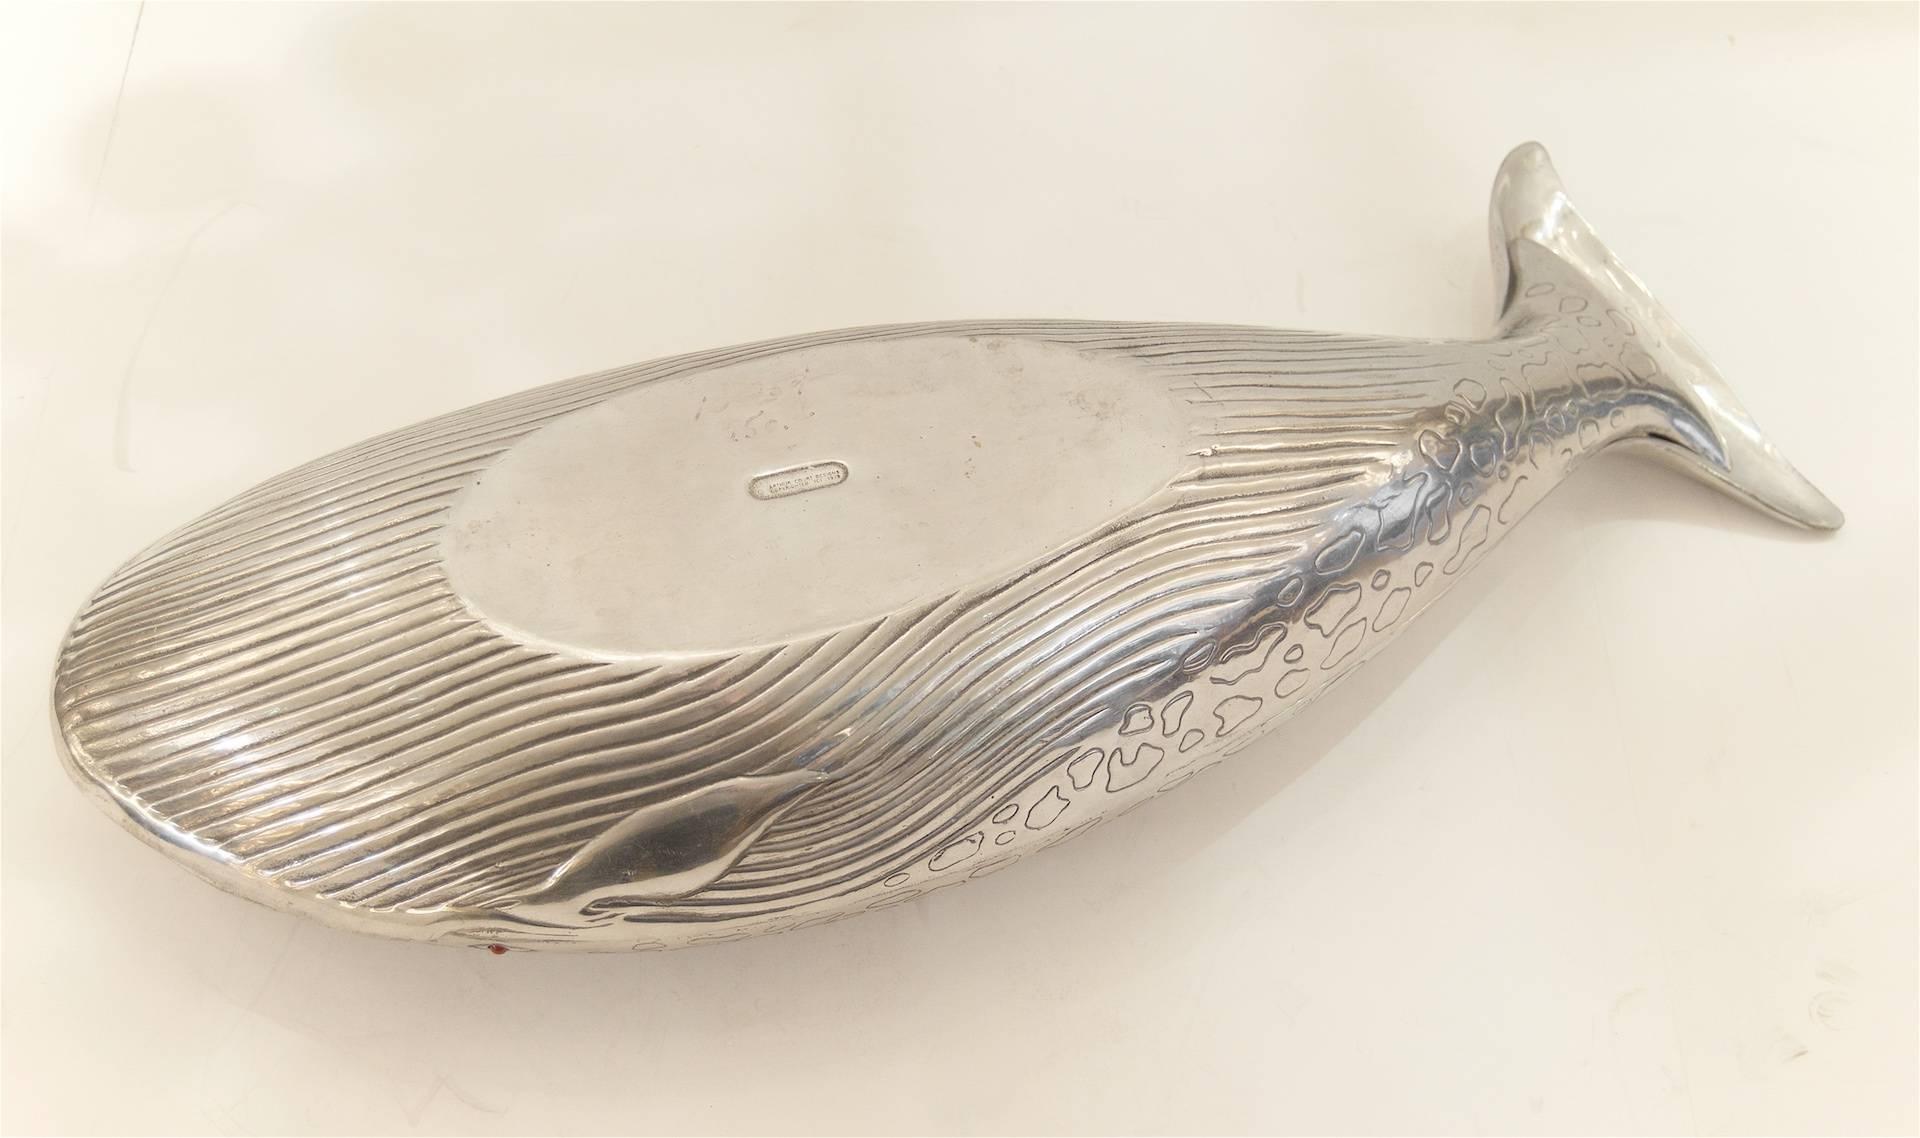 Decorative Whale Bowl or Centrepiece 2